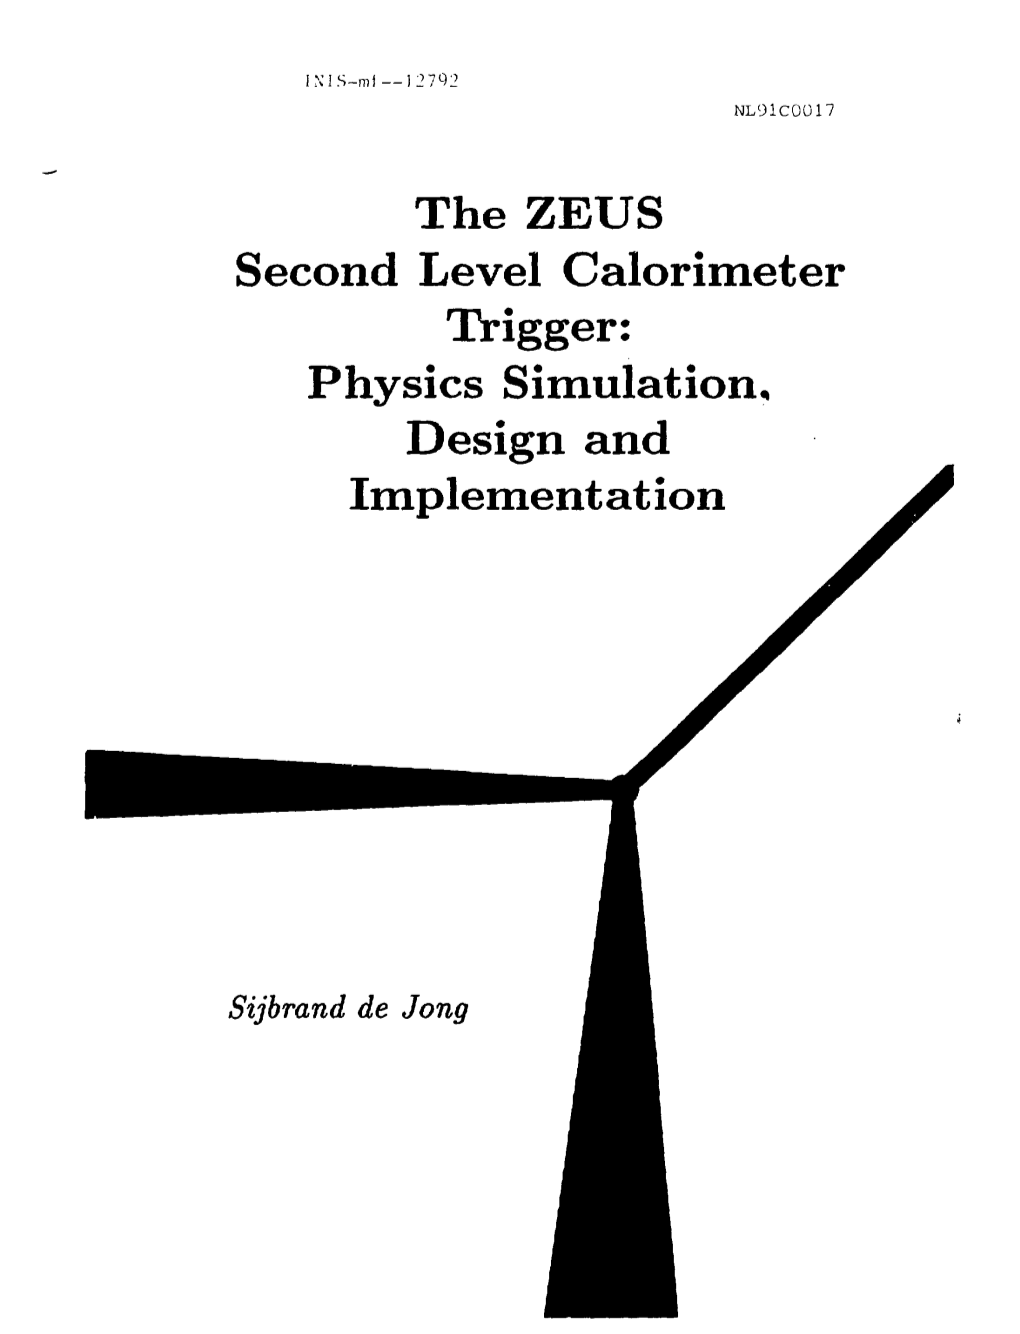 The ZEUS Second Level Calorimeter Trigger: Physics Simulation, Design and Implementation